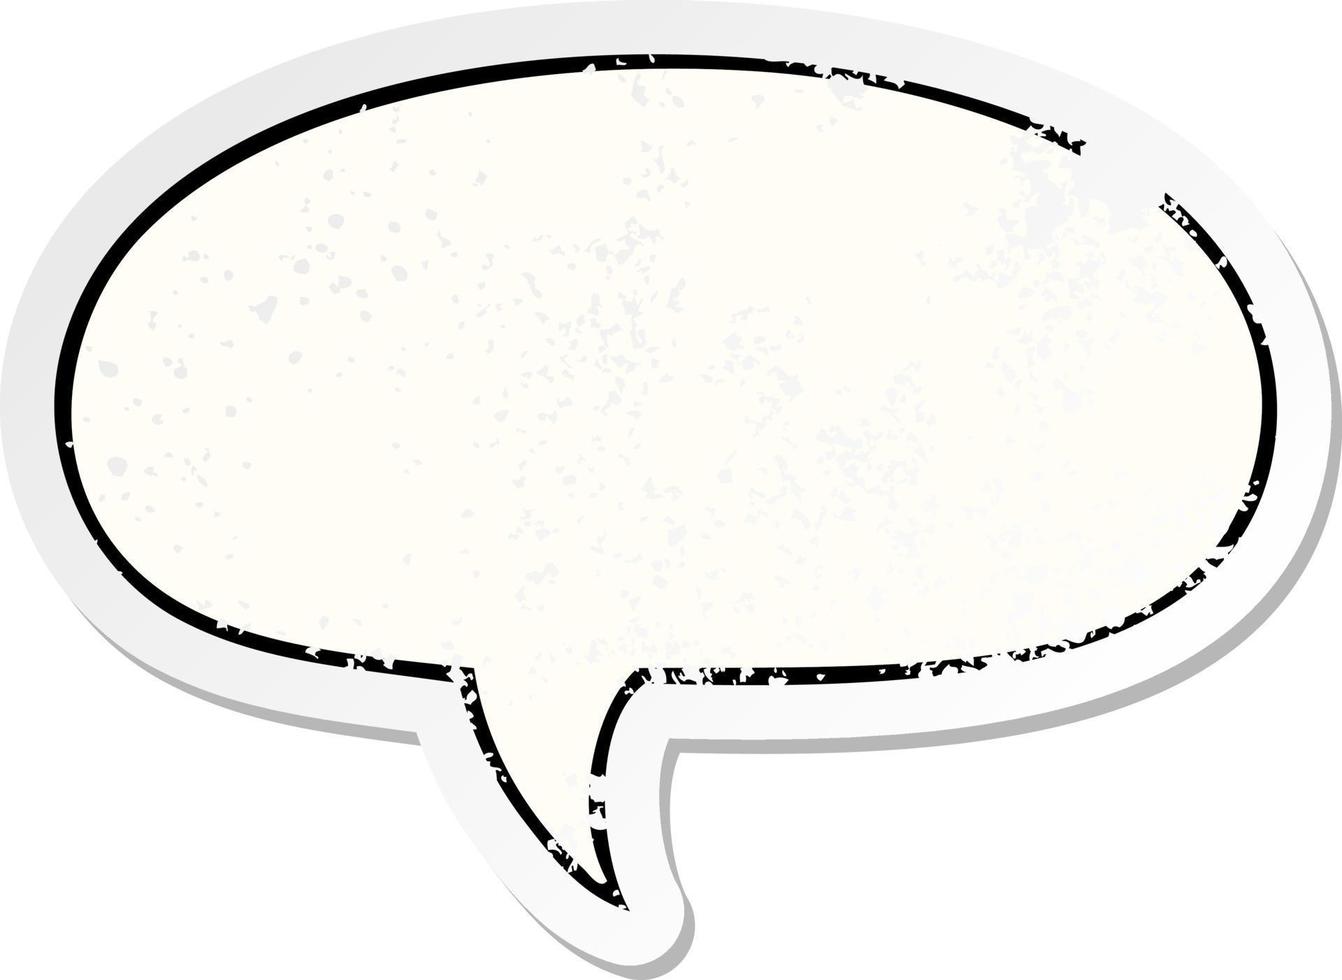 cartoon speech bubble distressed sticker and speech bubble distressed sticker vector